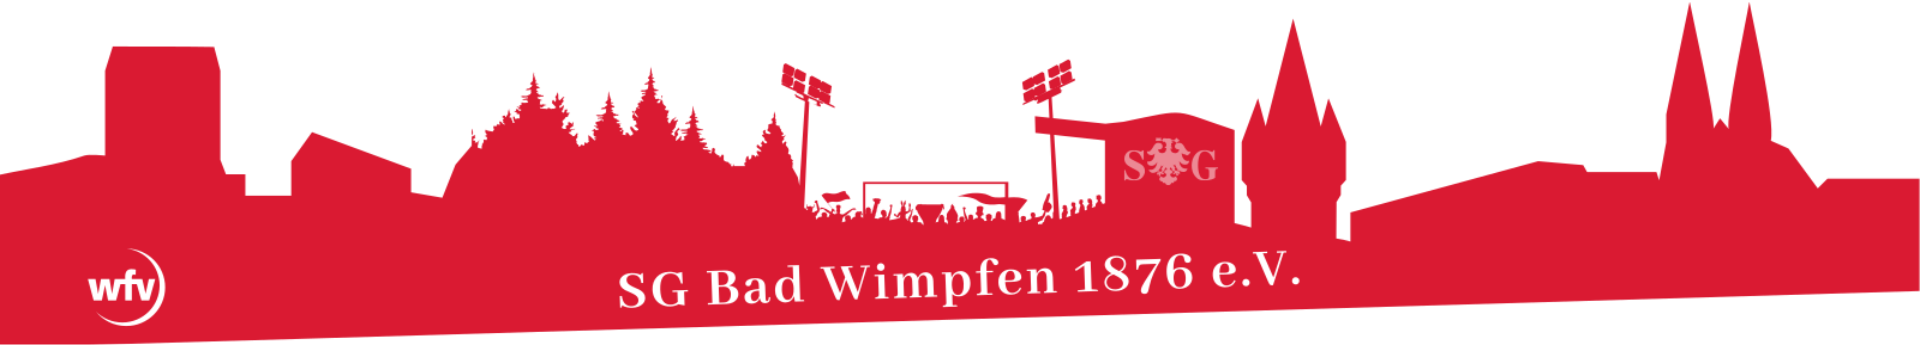 SG Bad Wimpfen Title Image